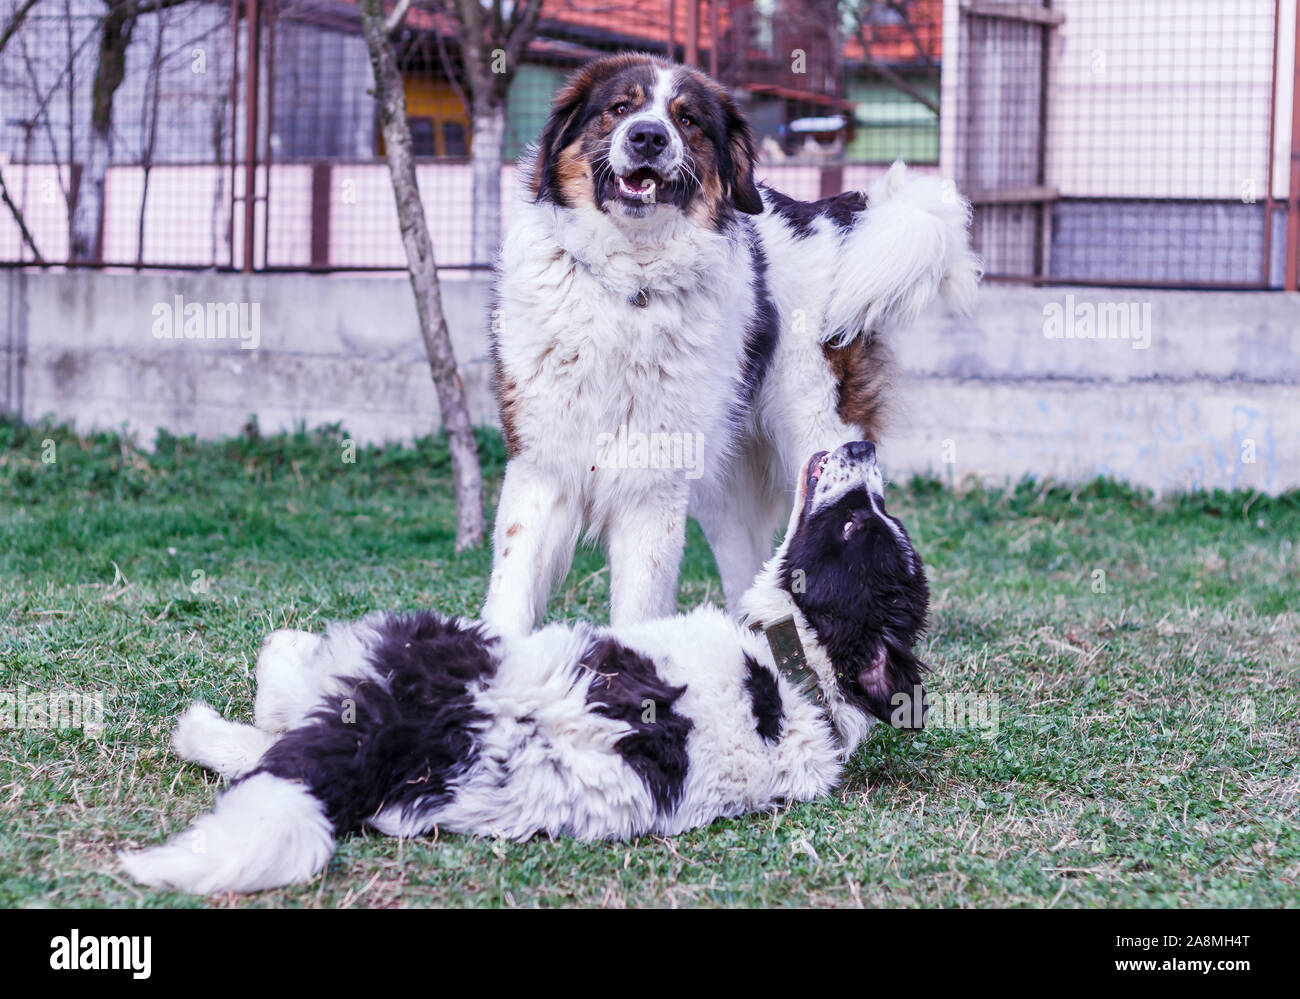 Livestock Guardian Dog, Tornjak from Vlasic mountain and Ciobanesc Romanesc de Bucovina, herding dog, shepherd dog, LGD at play in Janja Bosnia Stock Photo